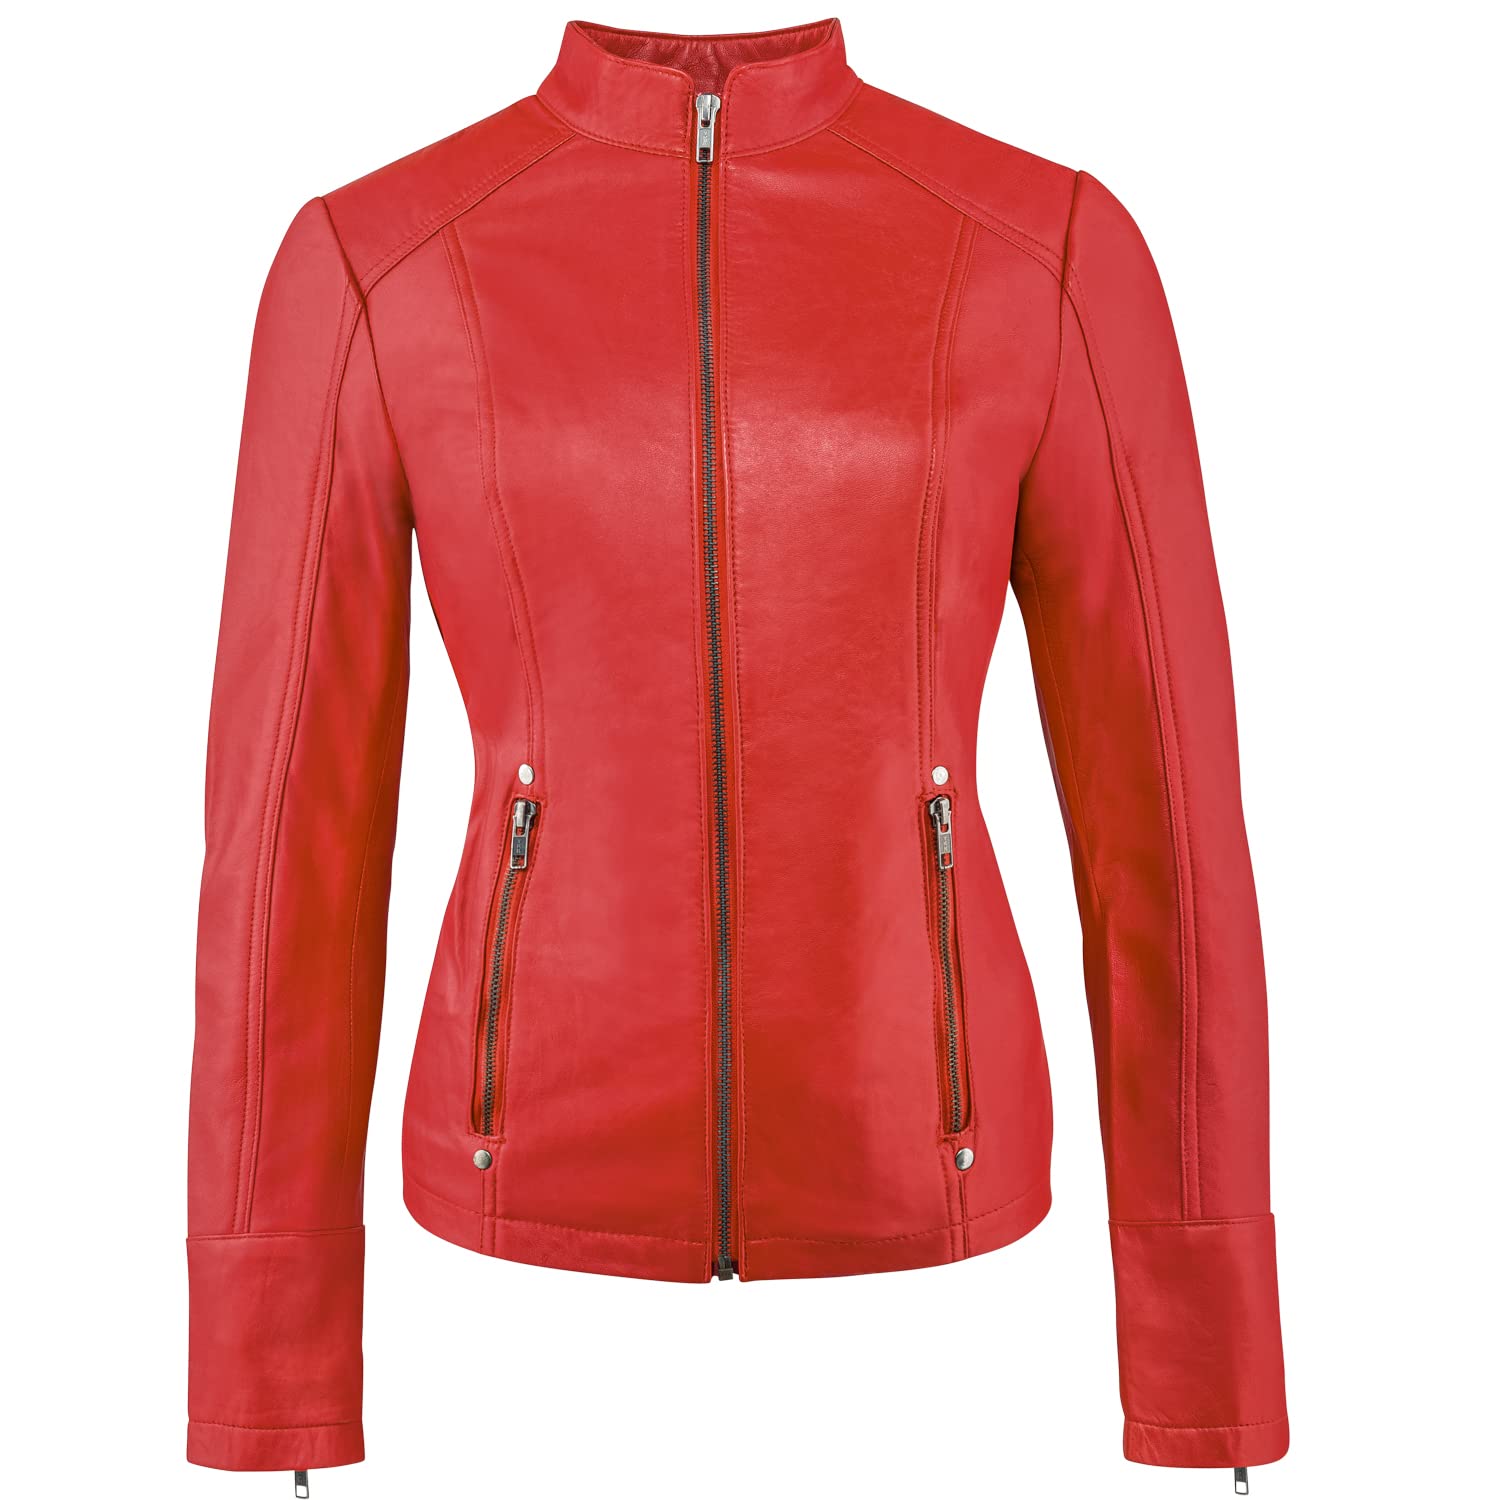 Urban Leather Fashion Lederjacke - Rt01, Rot, 3XL von URBAN 5884